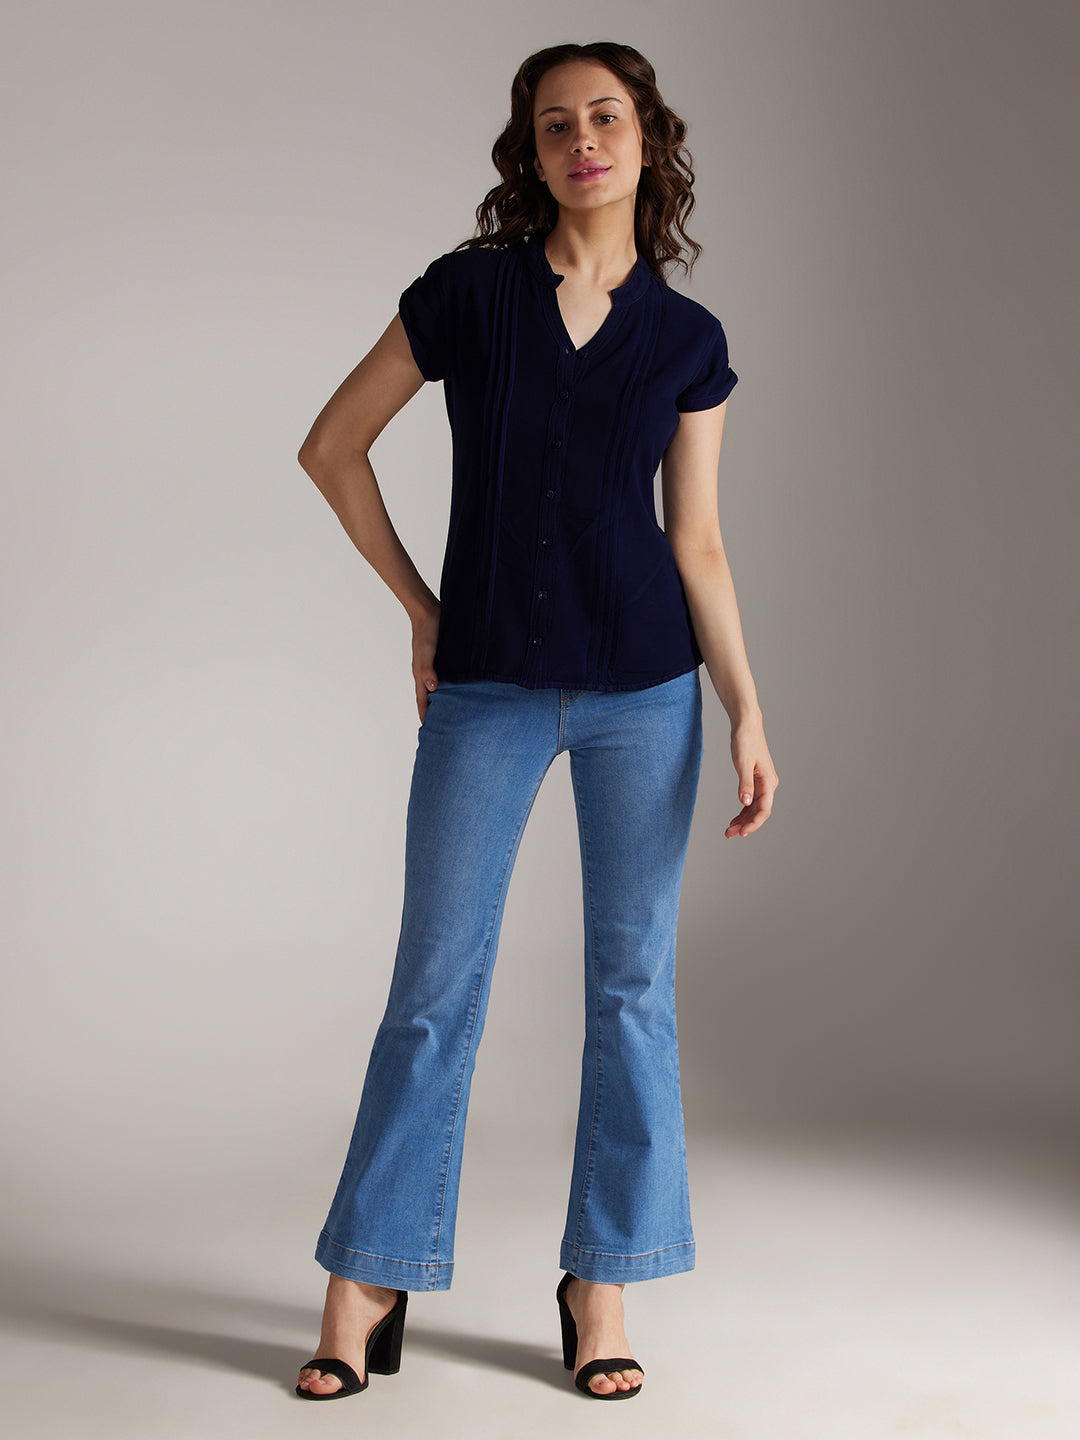 Identiti Women Solid Slim Fit Shirt - Navy